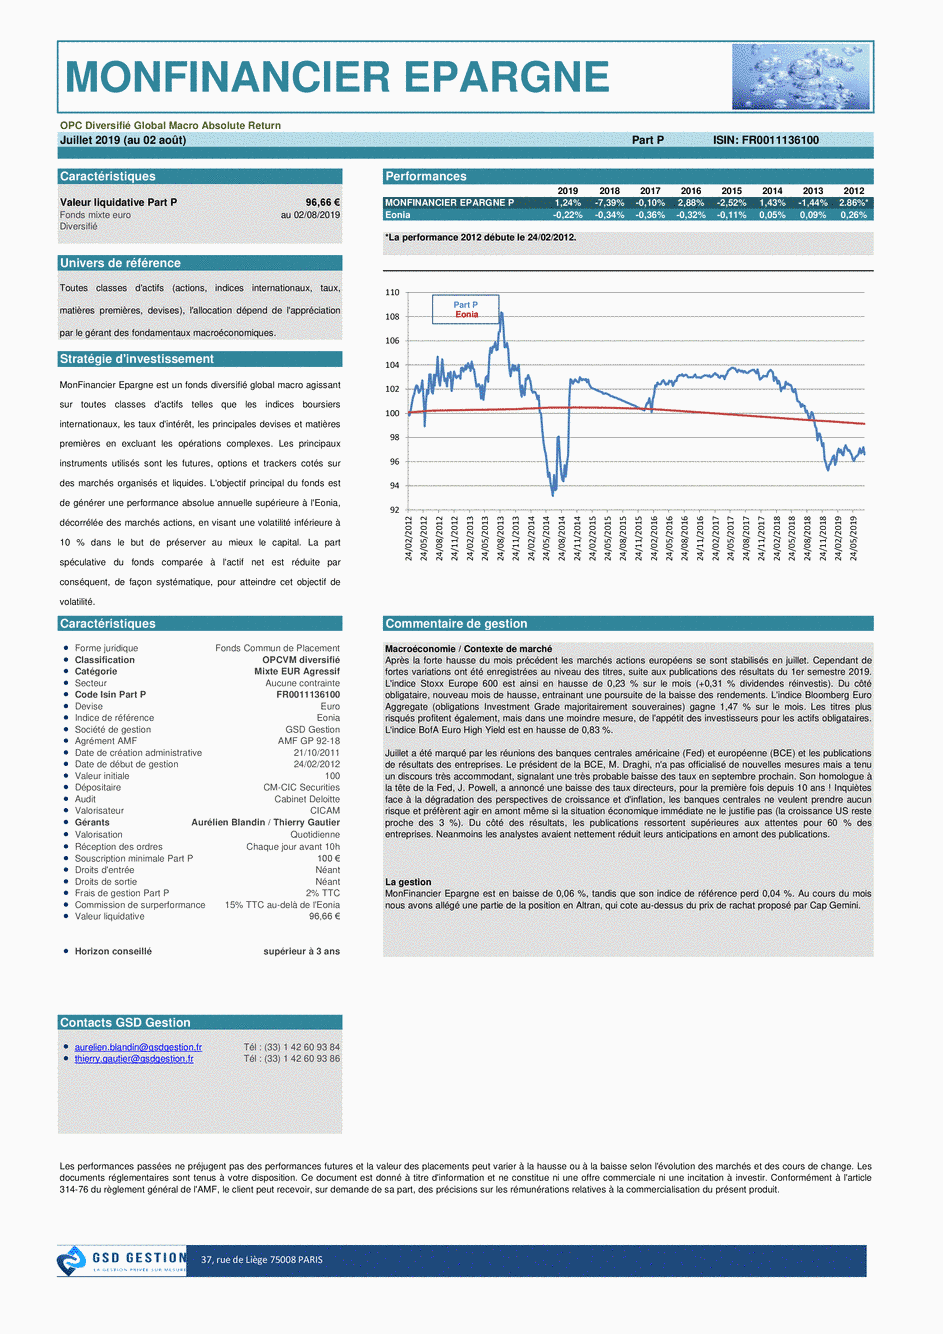 Reporting Monfinancier Epargne P - 09/08/2019 - undefined